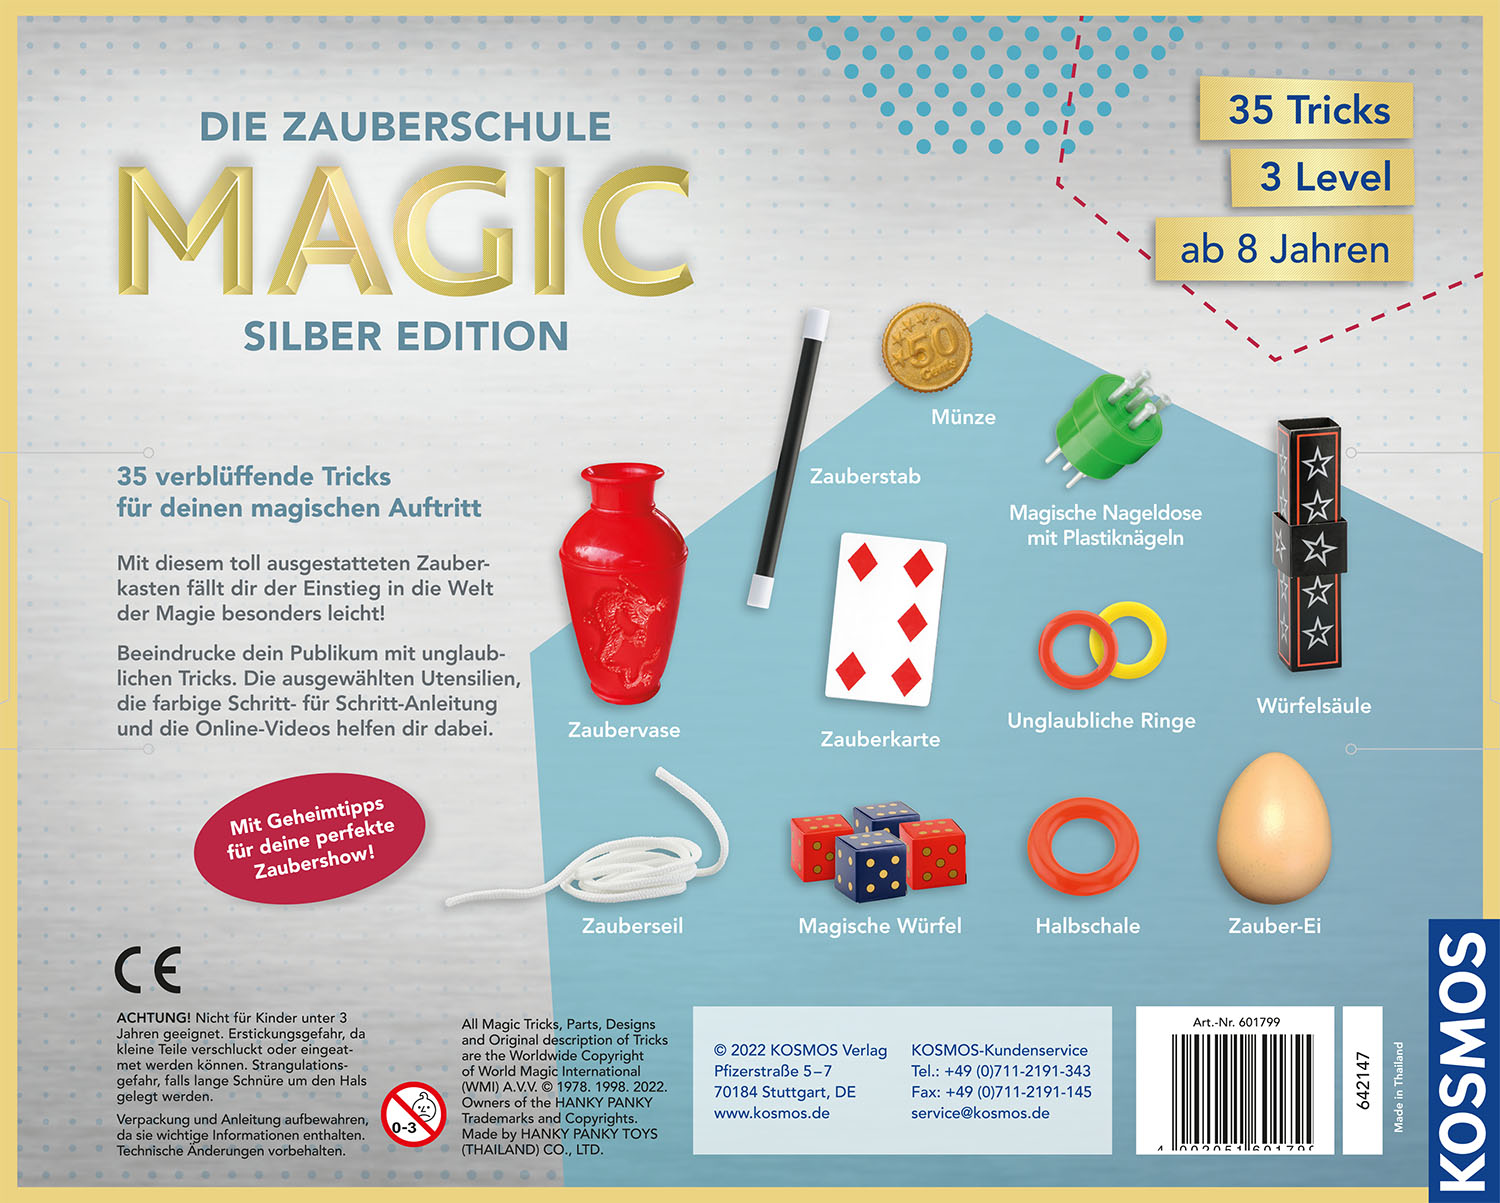 Die Zauberschule Magic - Silber Edition